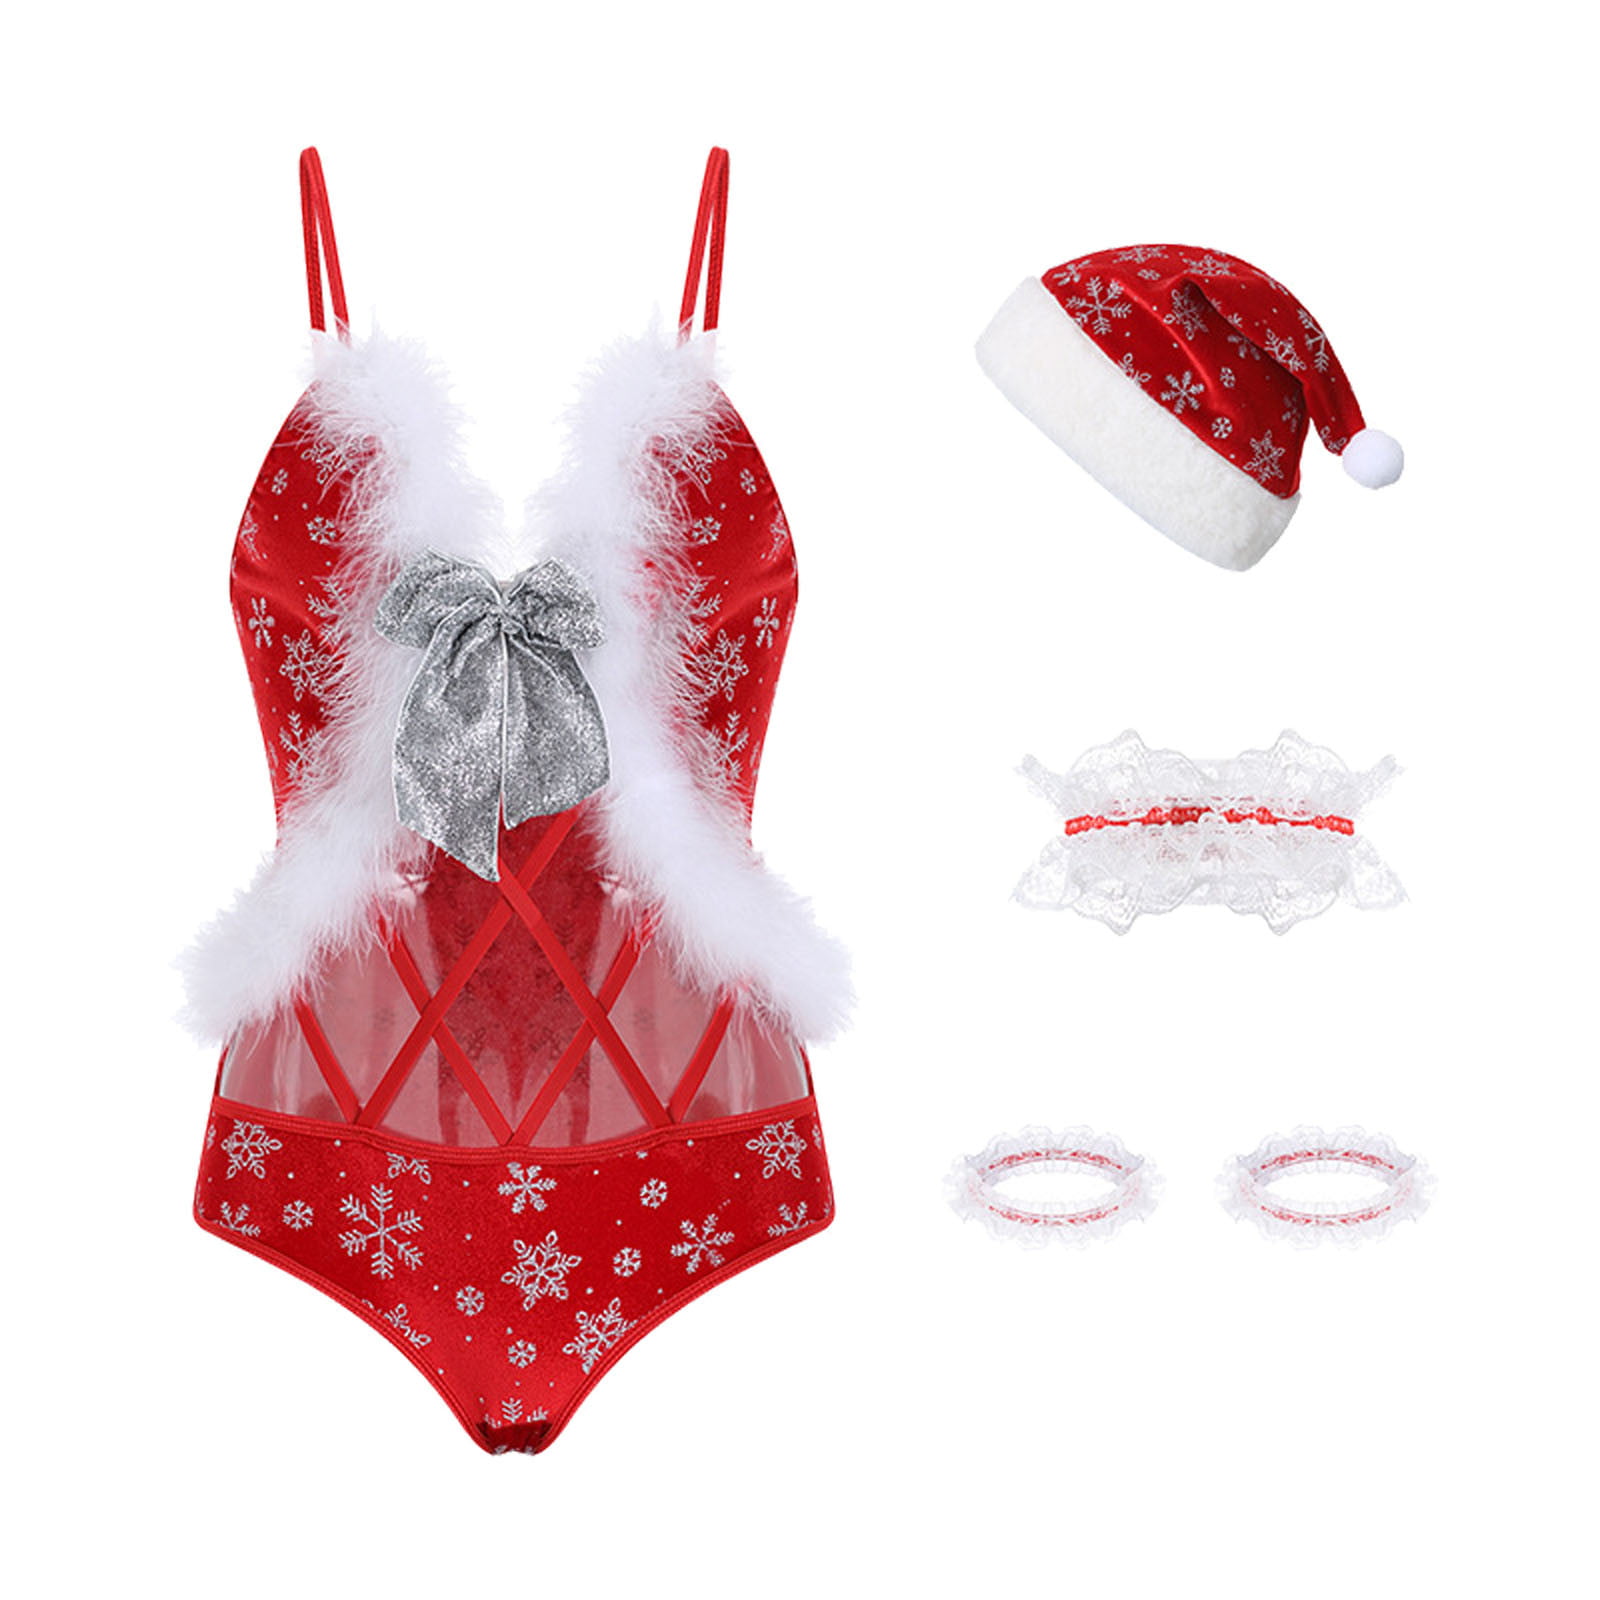 Men's Santa Thong Christmas Novelty Underwear Secret Santa Xmas Gift Primark 